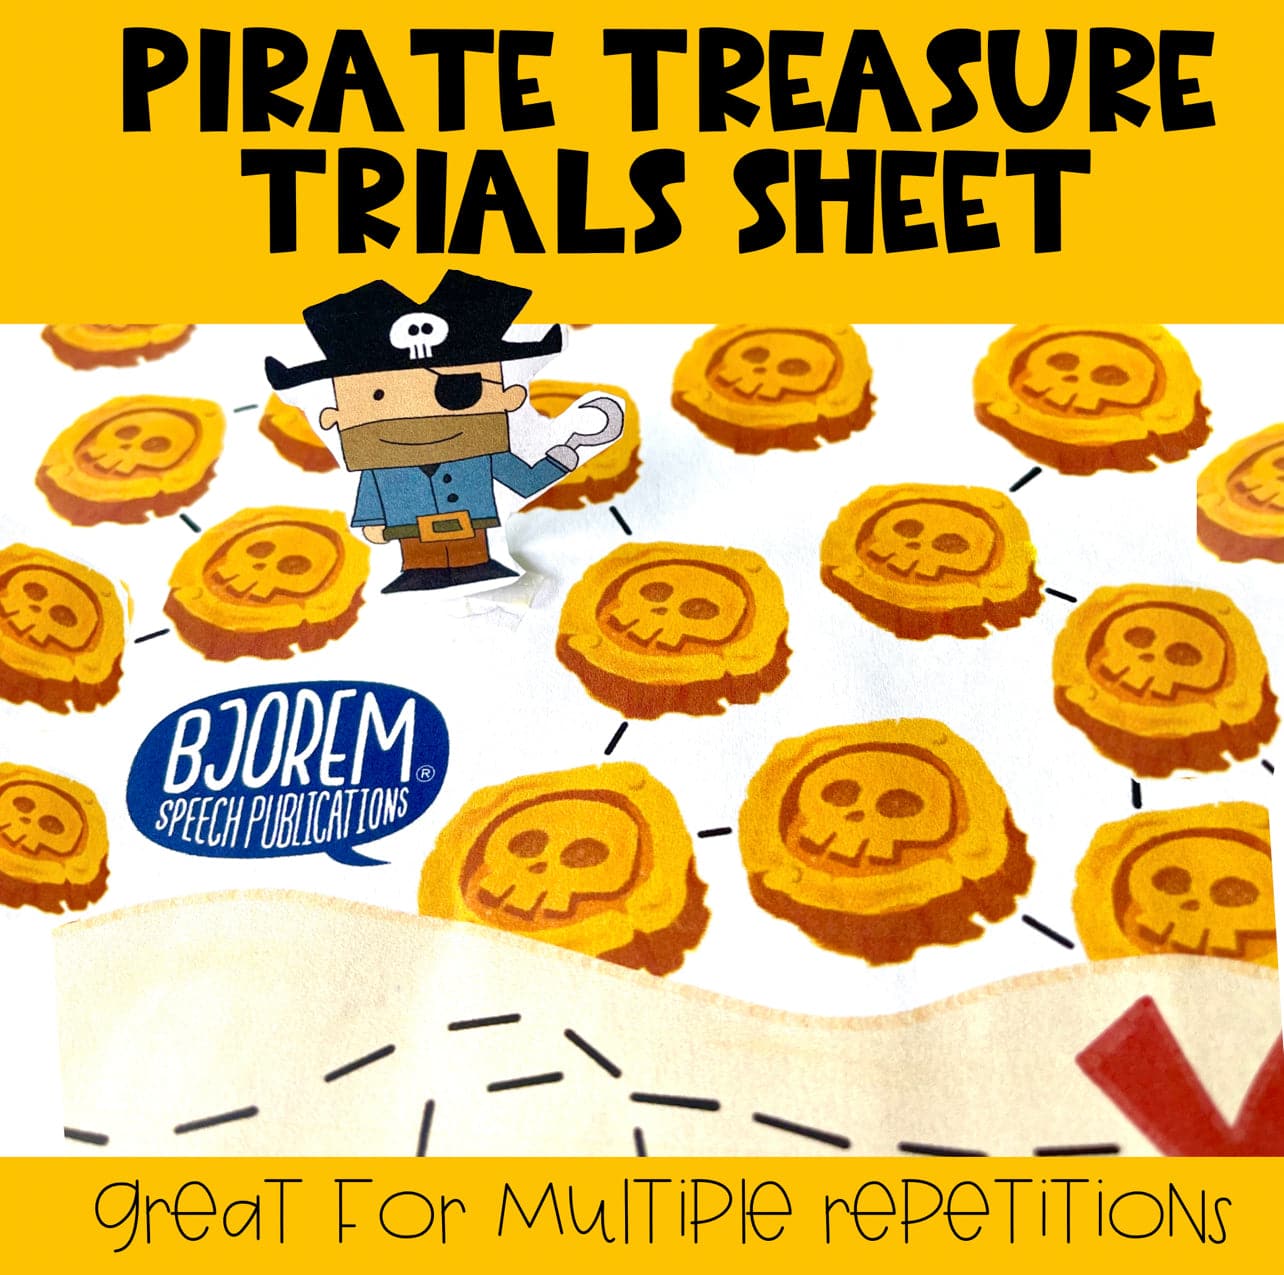 [title]Pirate Treasure Trials Sheet - Download